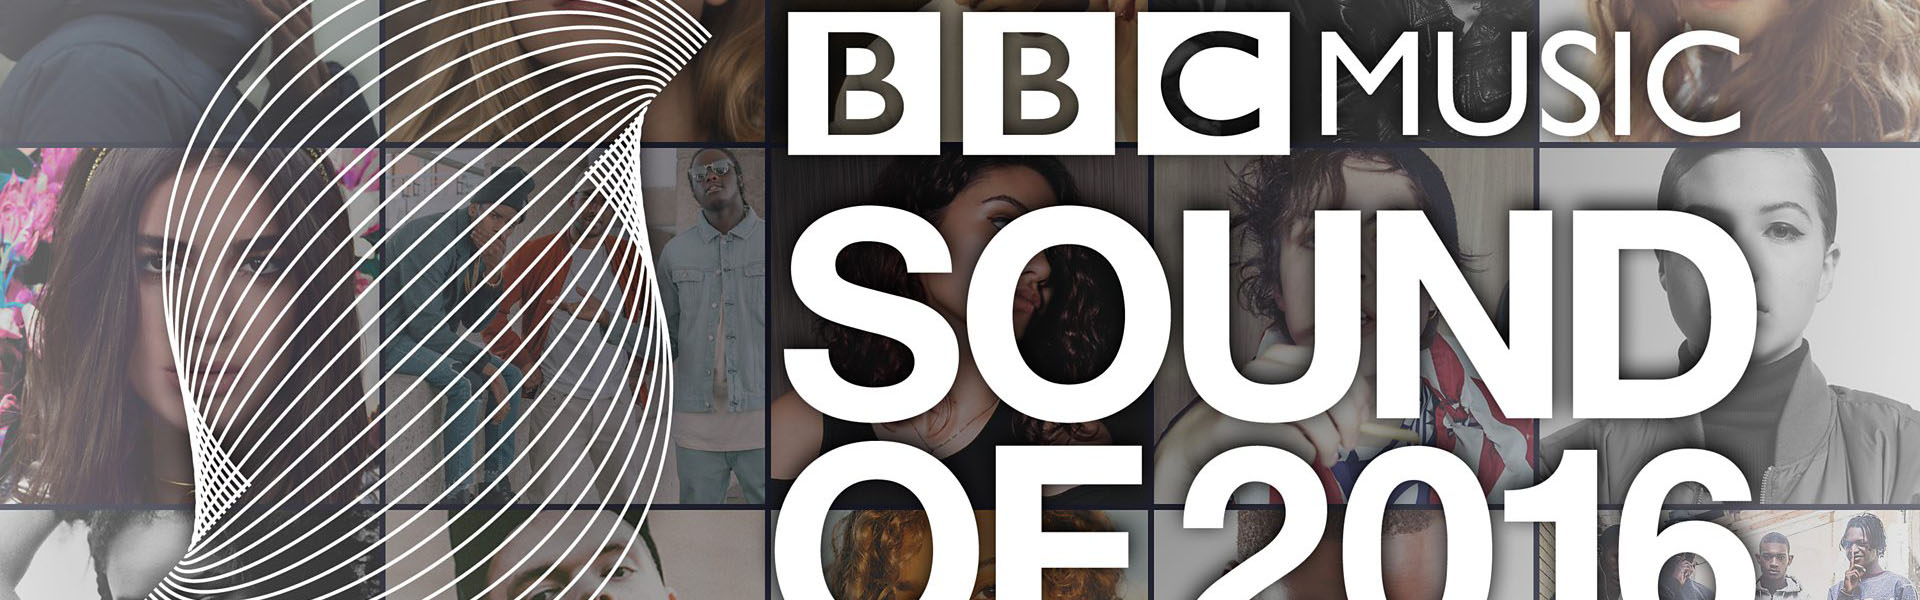 BBC Sound of 2017